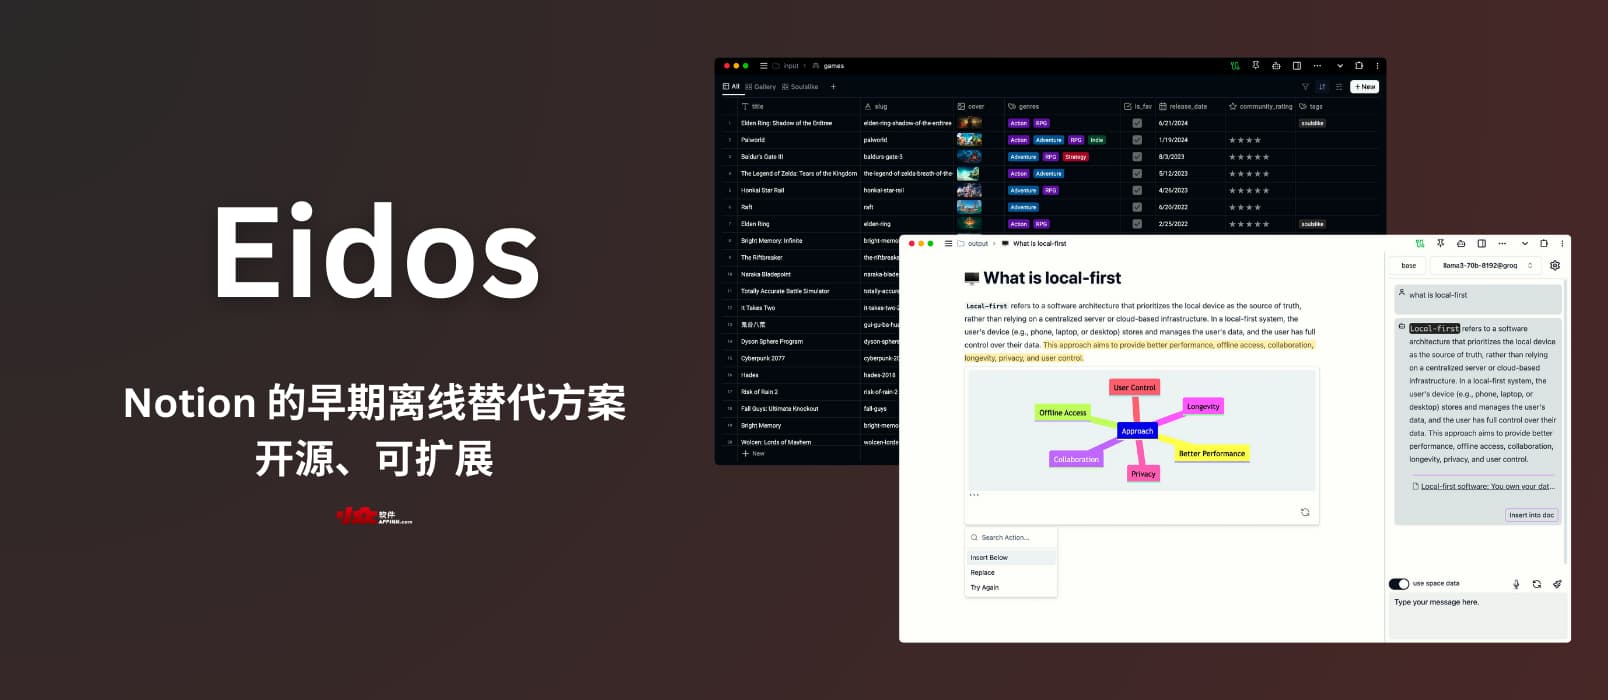 Eidos – Notion 的早期离线替代方案：开源、可扩展，在一处管理你的所有个人数据